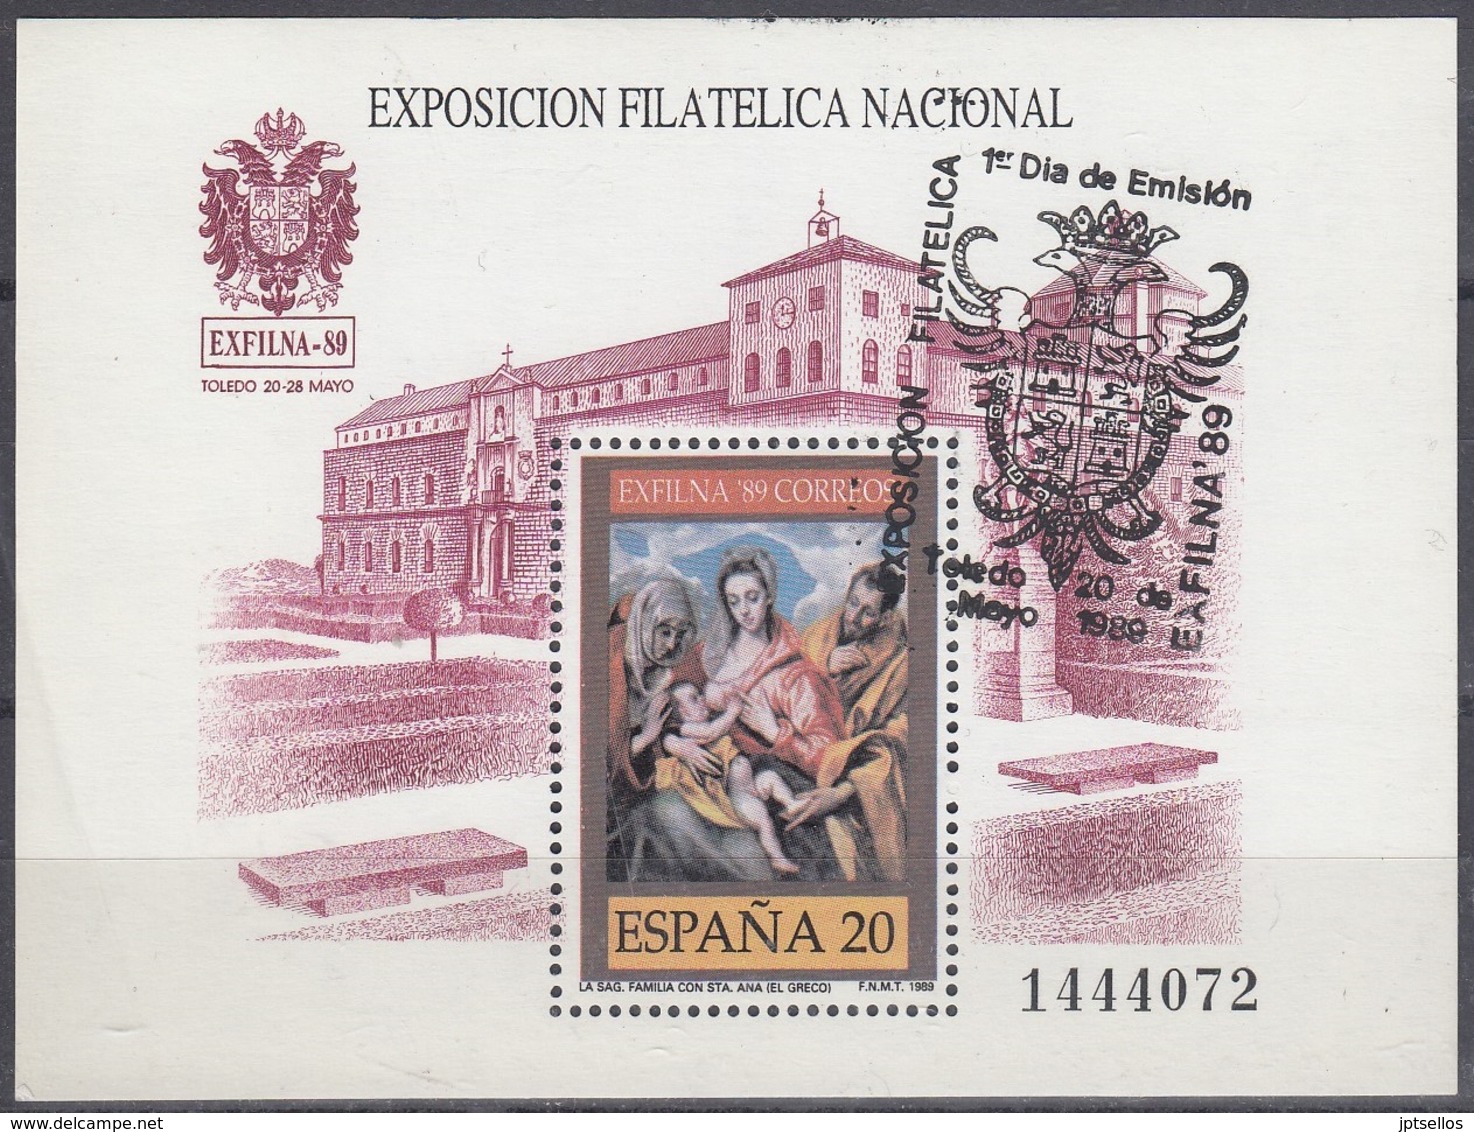 ESPAÑA 1989 Nº HB-3012 USADO 1º DIA - Used Stamps